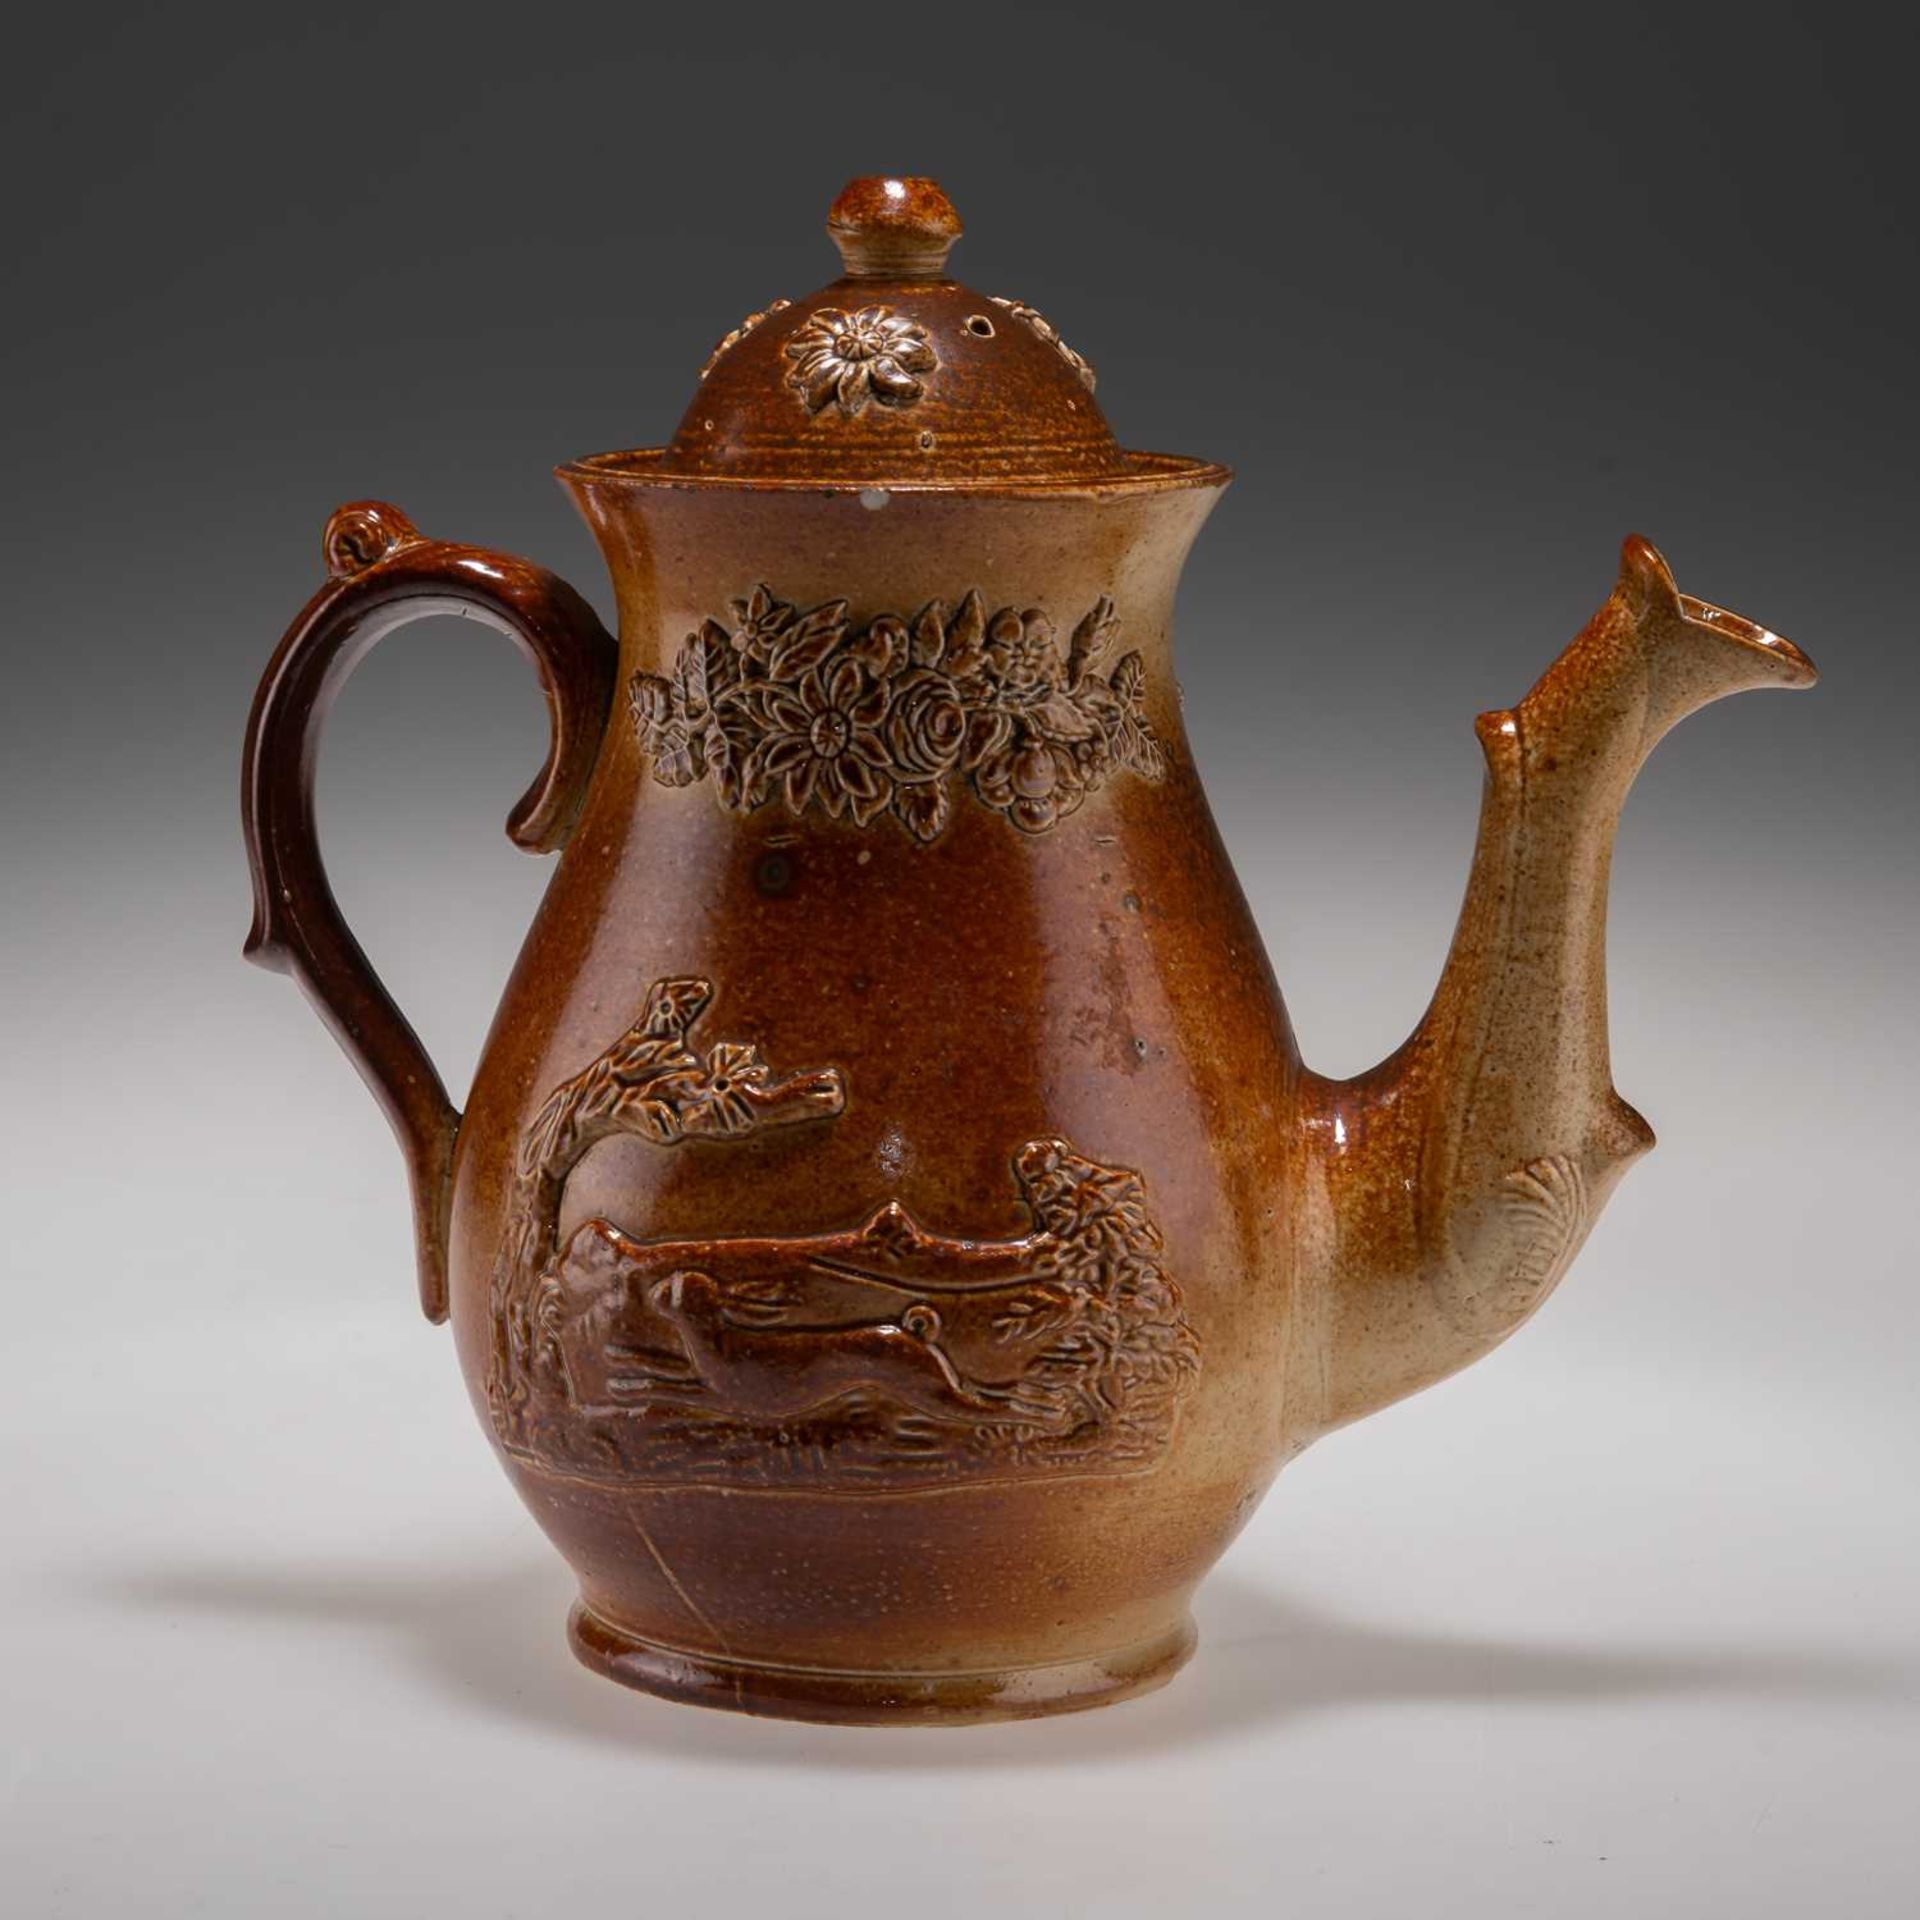 A BRAMPTON DERBYSHIRE BROWN SALT-GLAZED STONEWARE COFFEE POT, CIRCA 1830-40